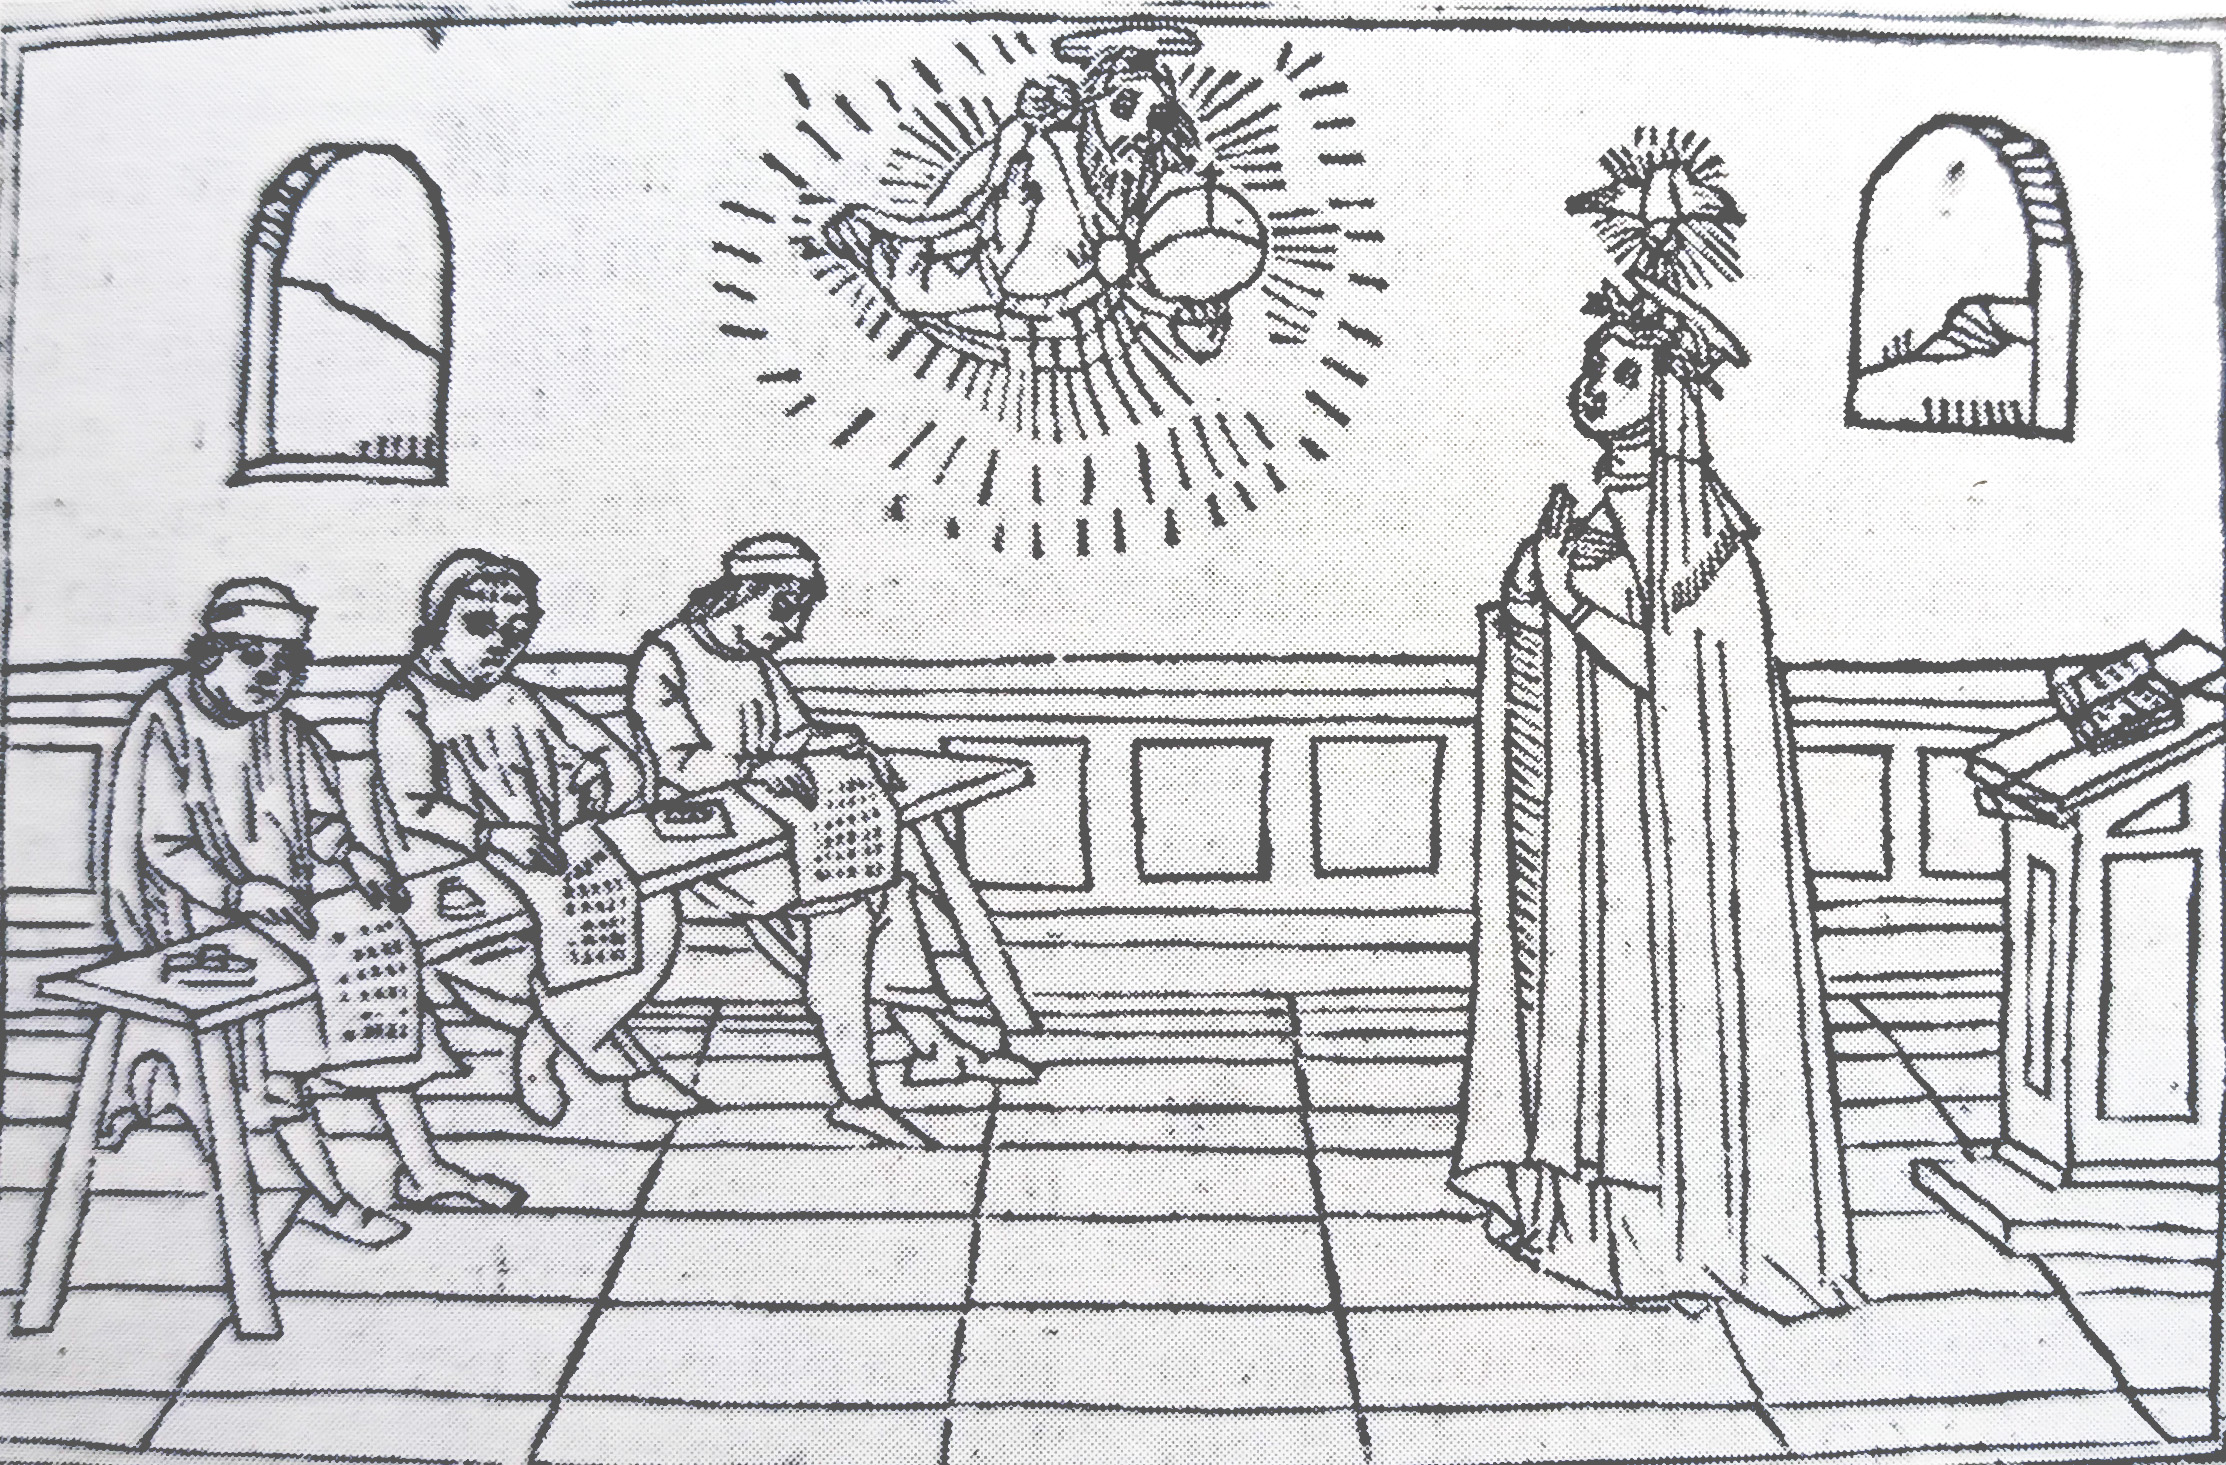 Santa Caterina in estasi detta a tre segretari,
Città del Vaticano, Biblioteca Apostolica Vaticana